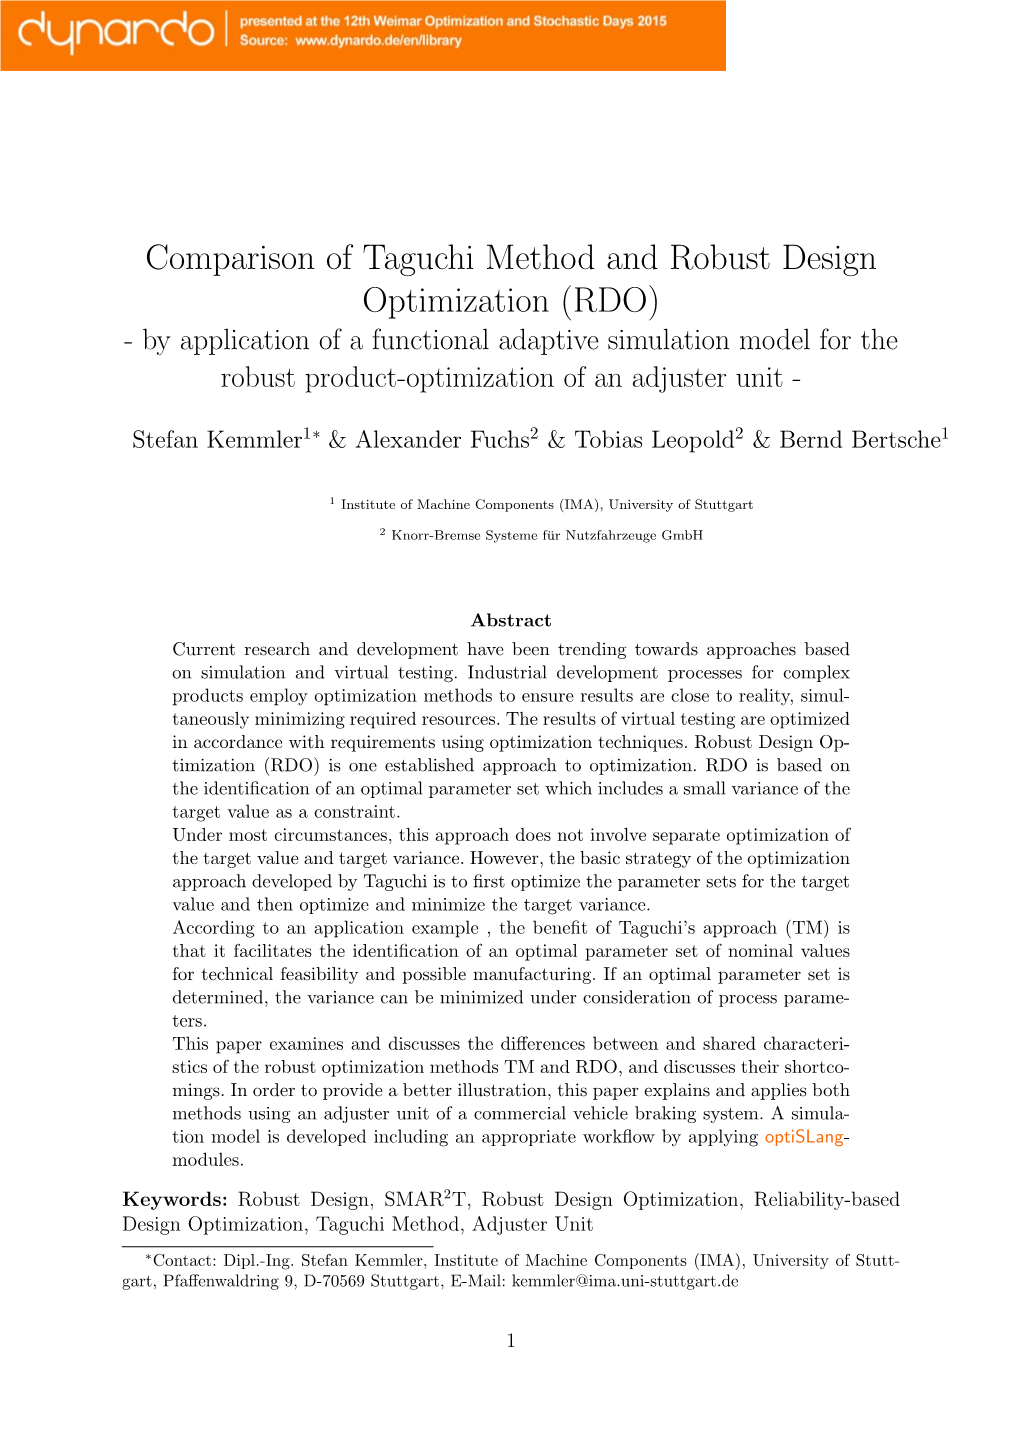 Comparison of Taguchi Method and Robust Design Optimization (RDO)